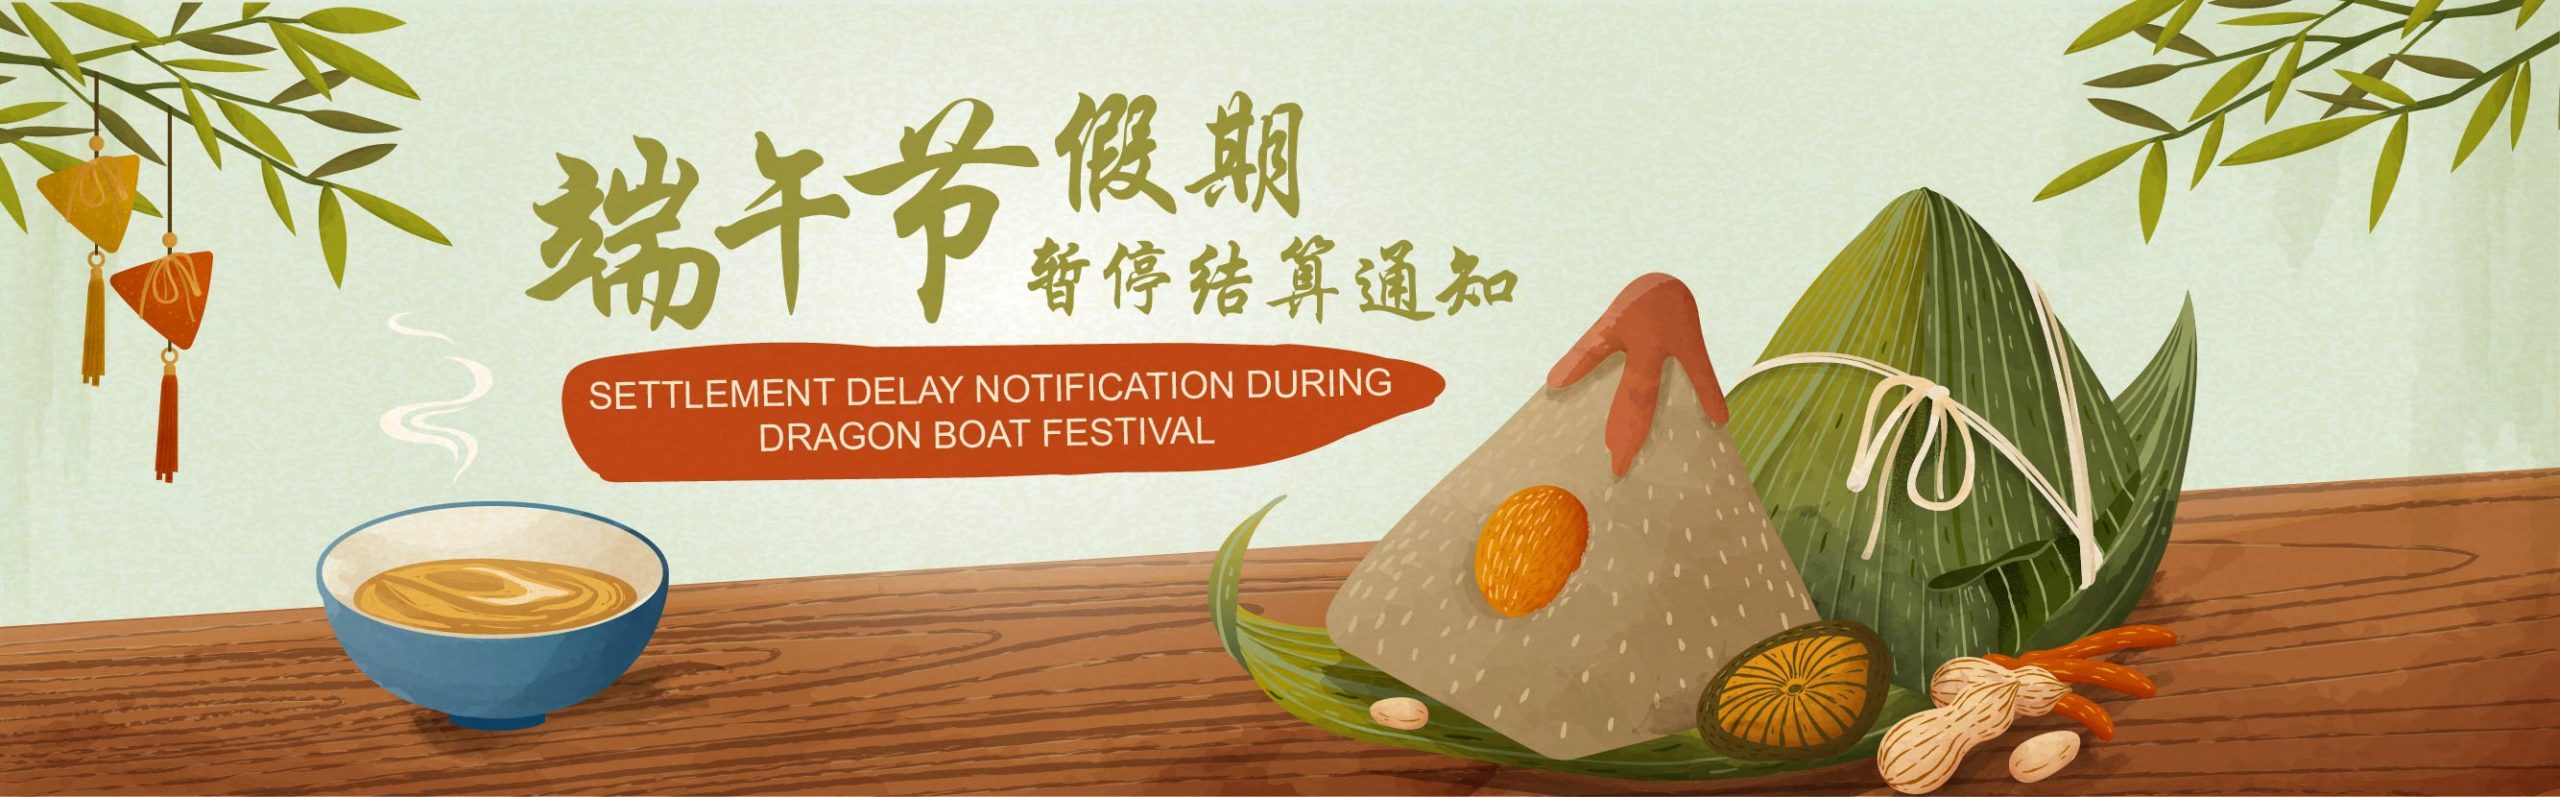 Settlement Delay Notification During Dragon Boat Festival 关于端午节假期暂停结算的通知